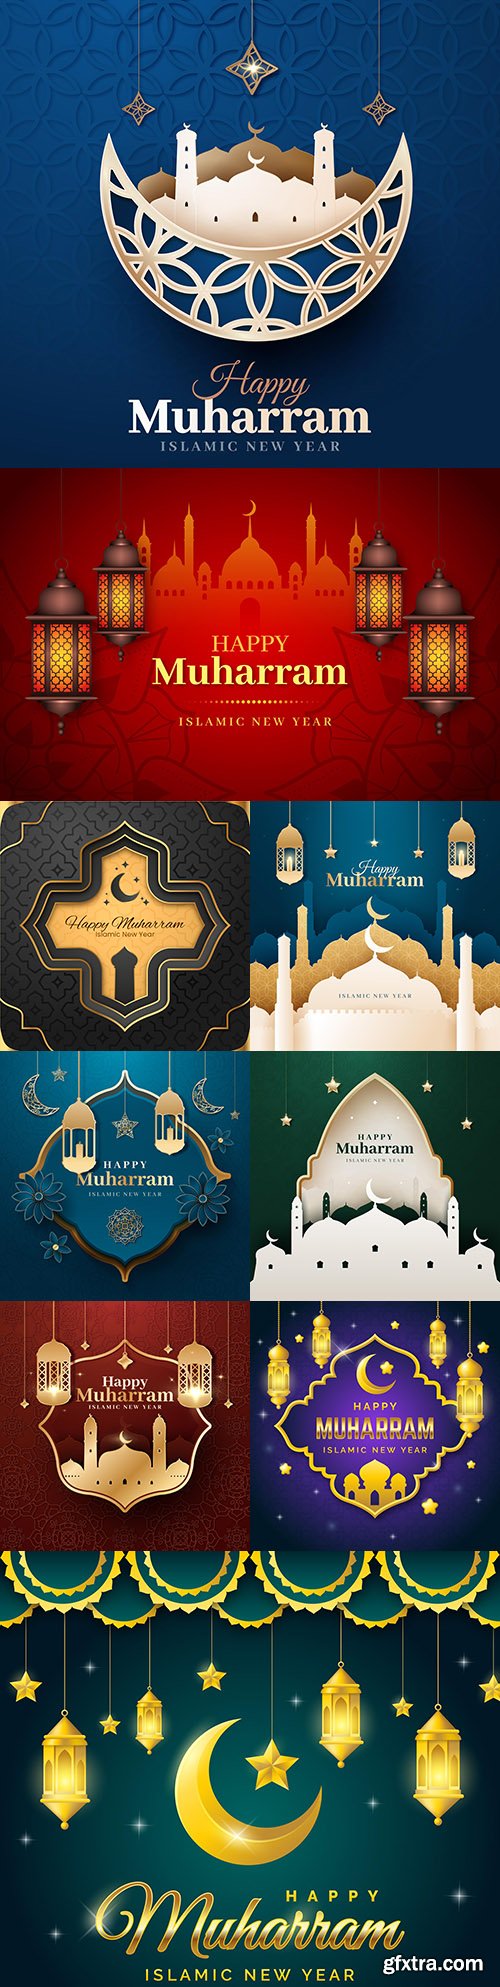 Happy Muharram Islamic New Year illustration